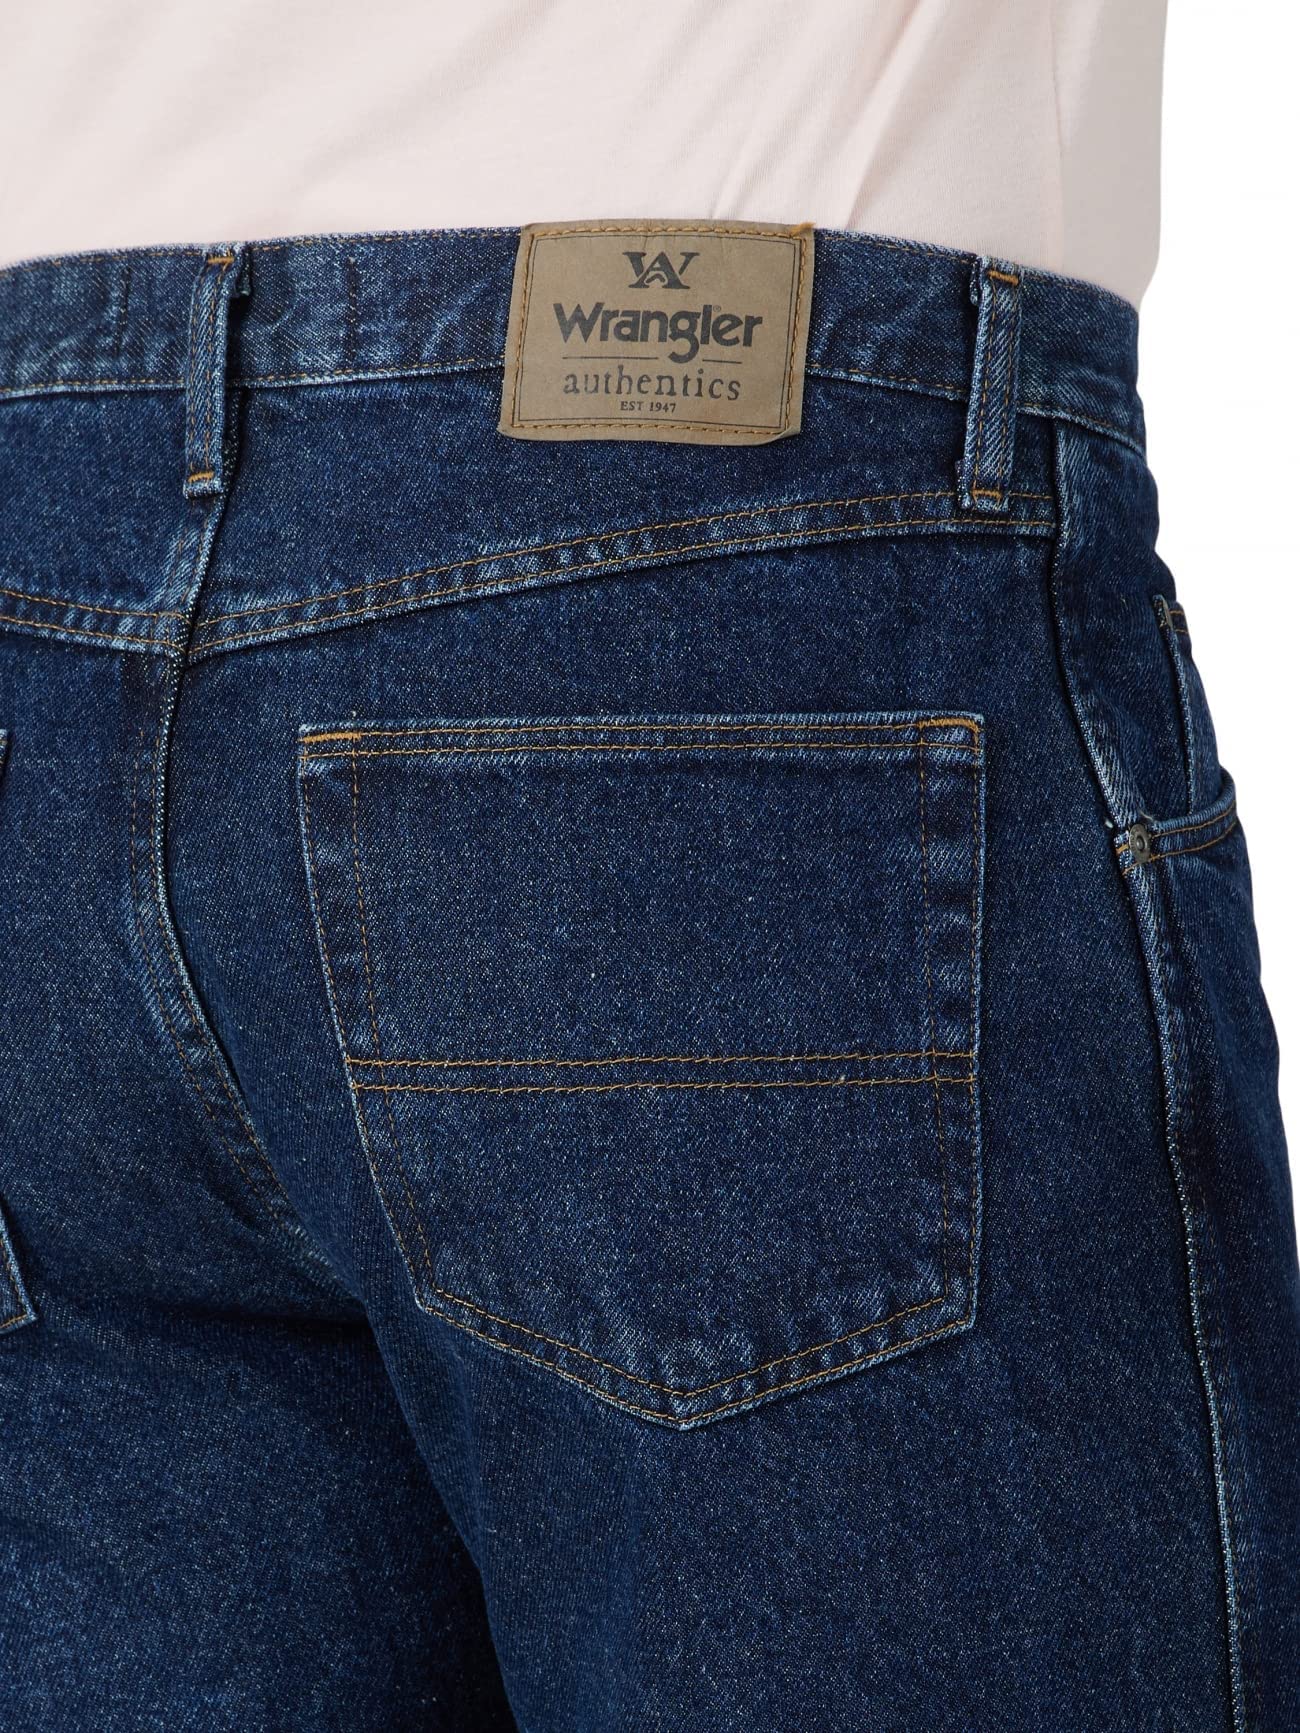 Wrangler Authentics Men's Classic 5-Pocket Regular Fit Cotton Jean, Dark Rinse, 42W x 34L